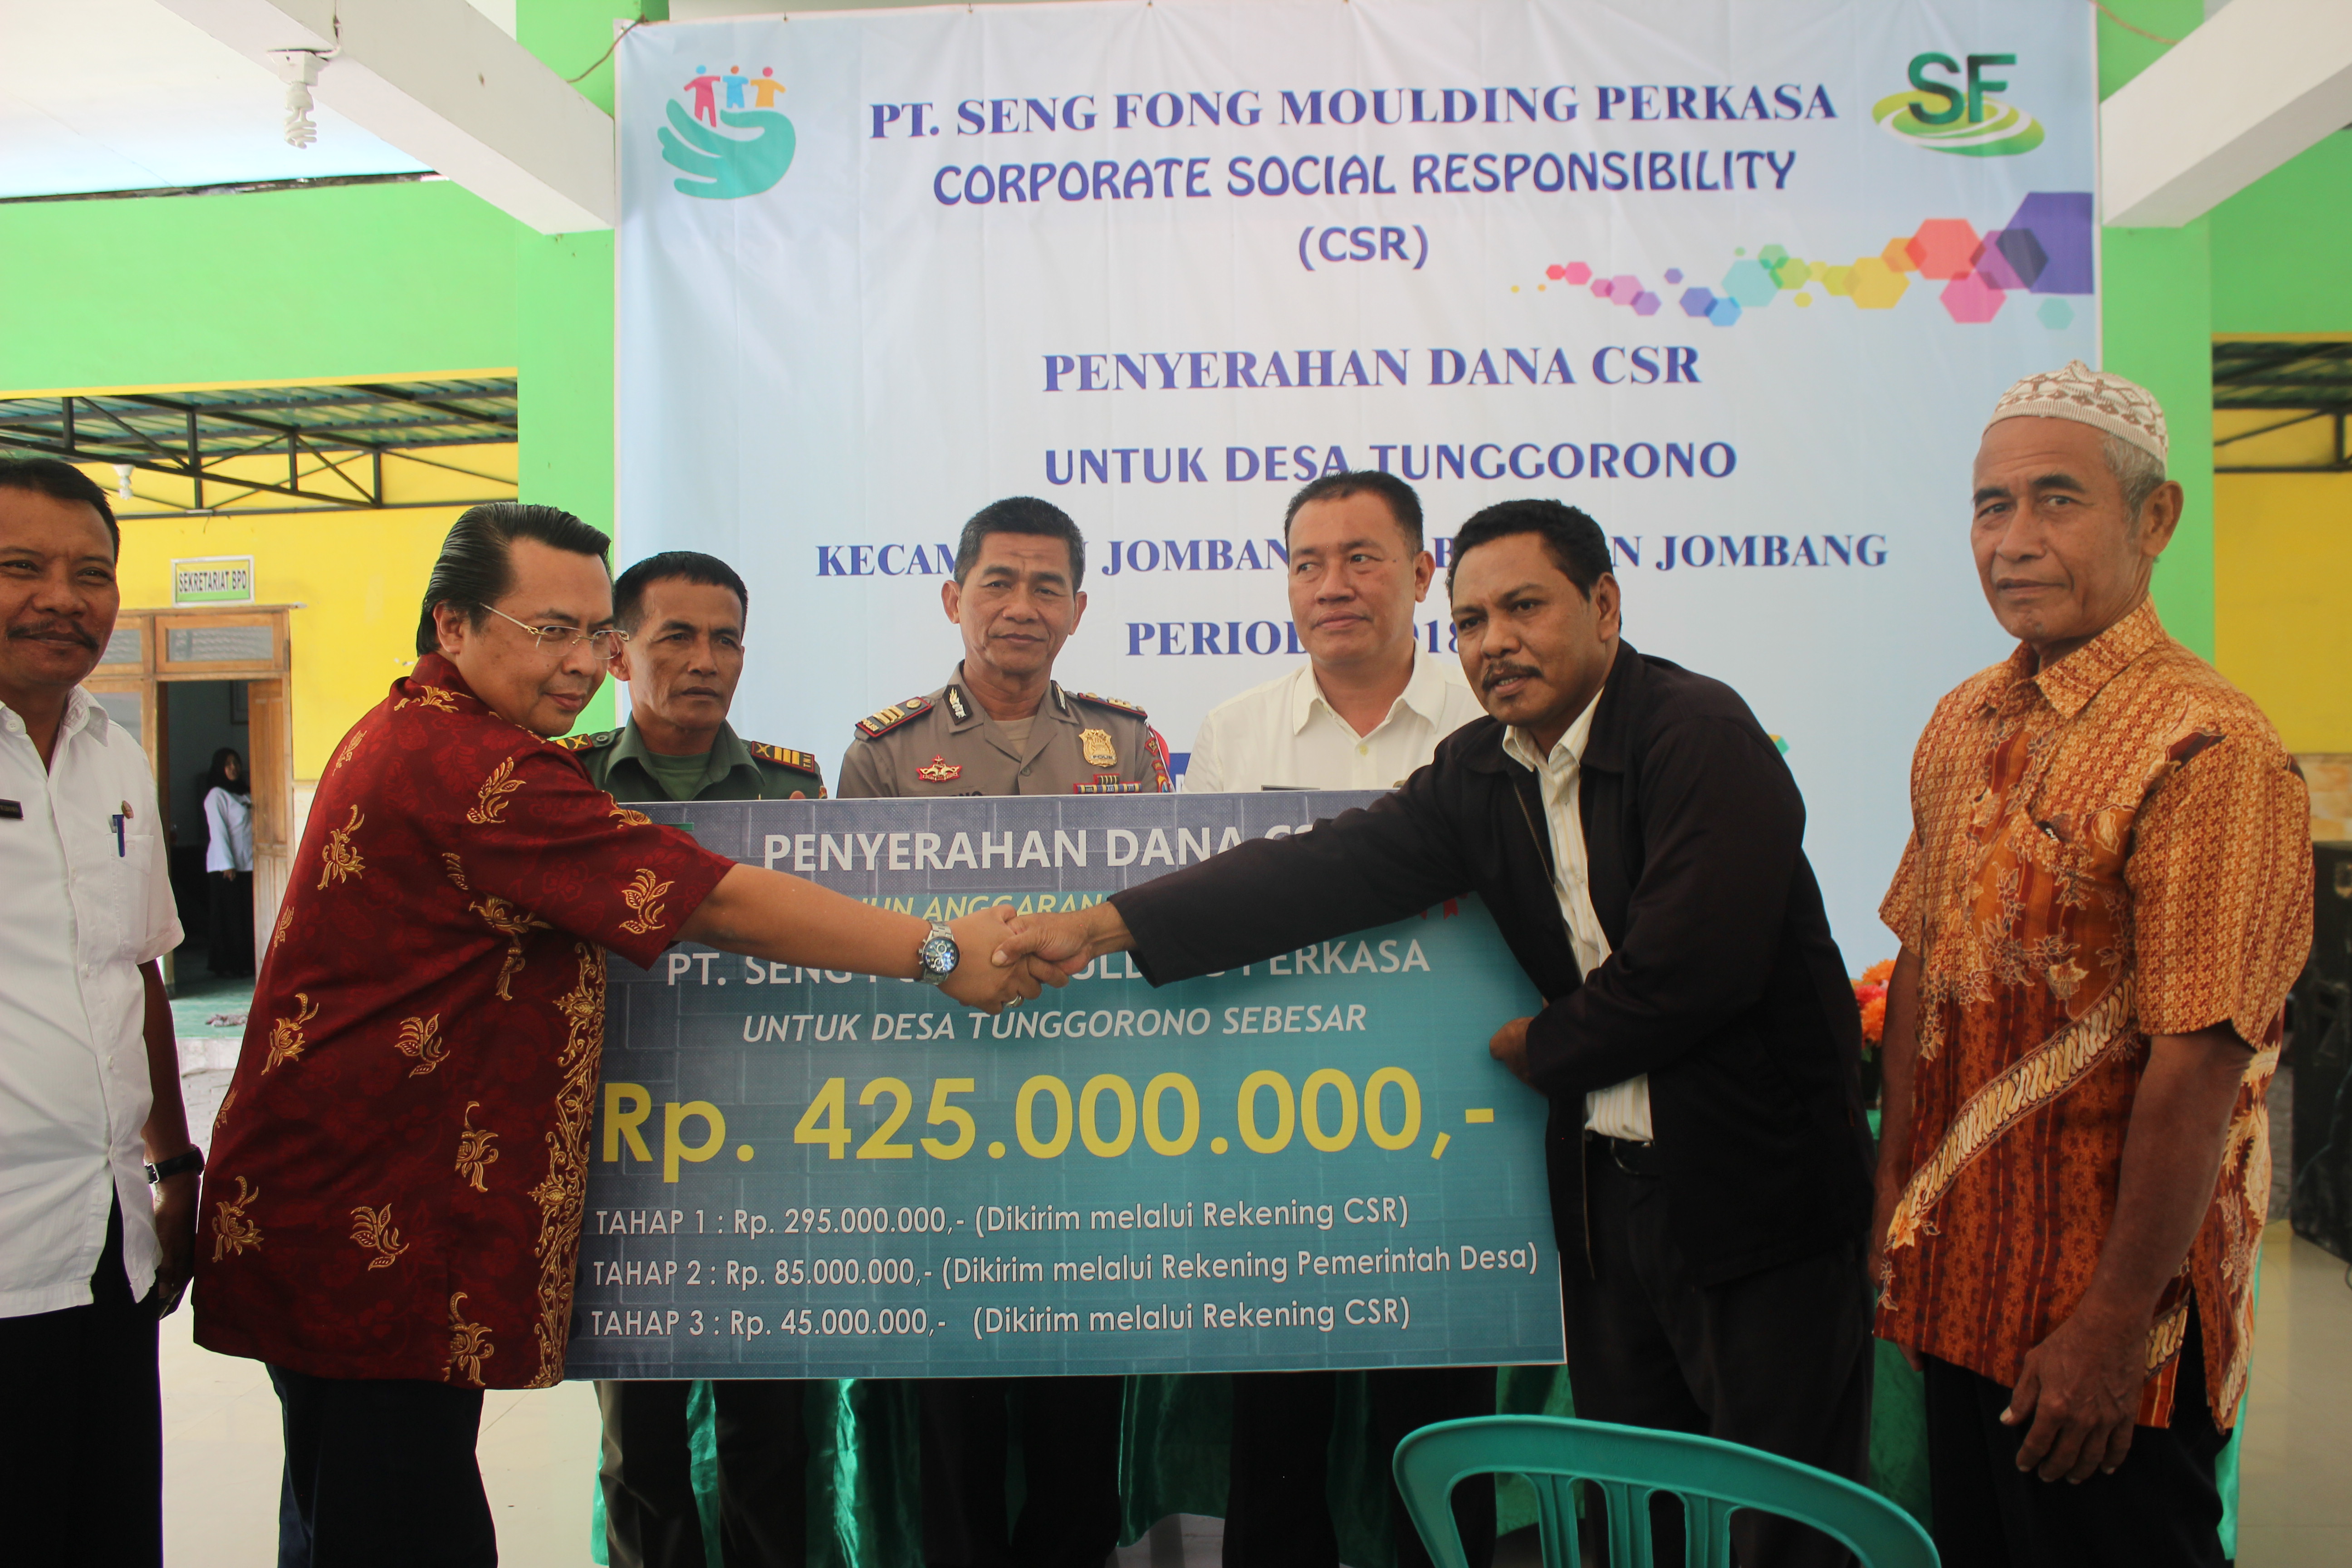 PT. Seng Fong Moulding Perkasa Corporate Social Responsibility Event